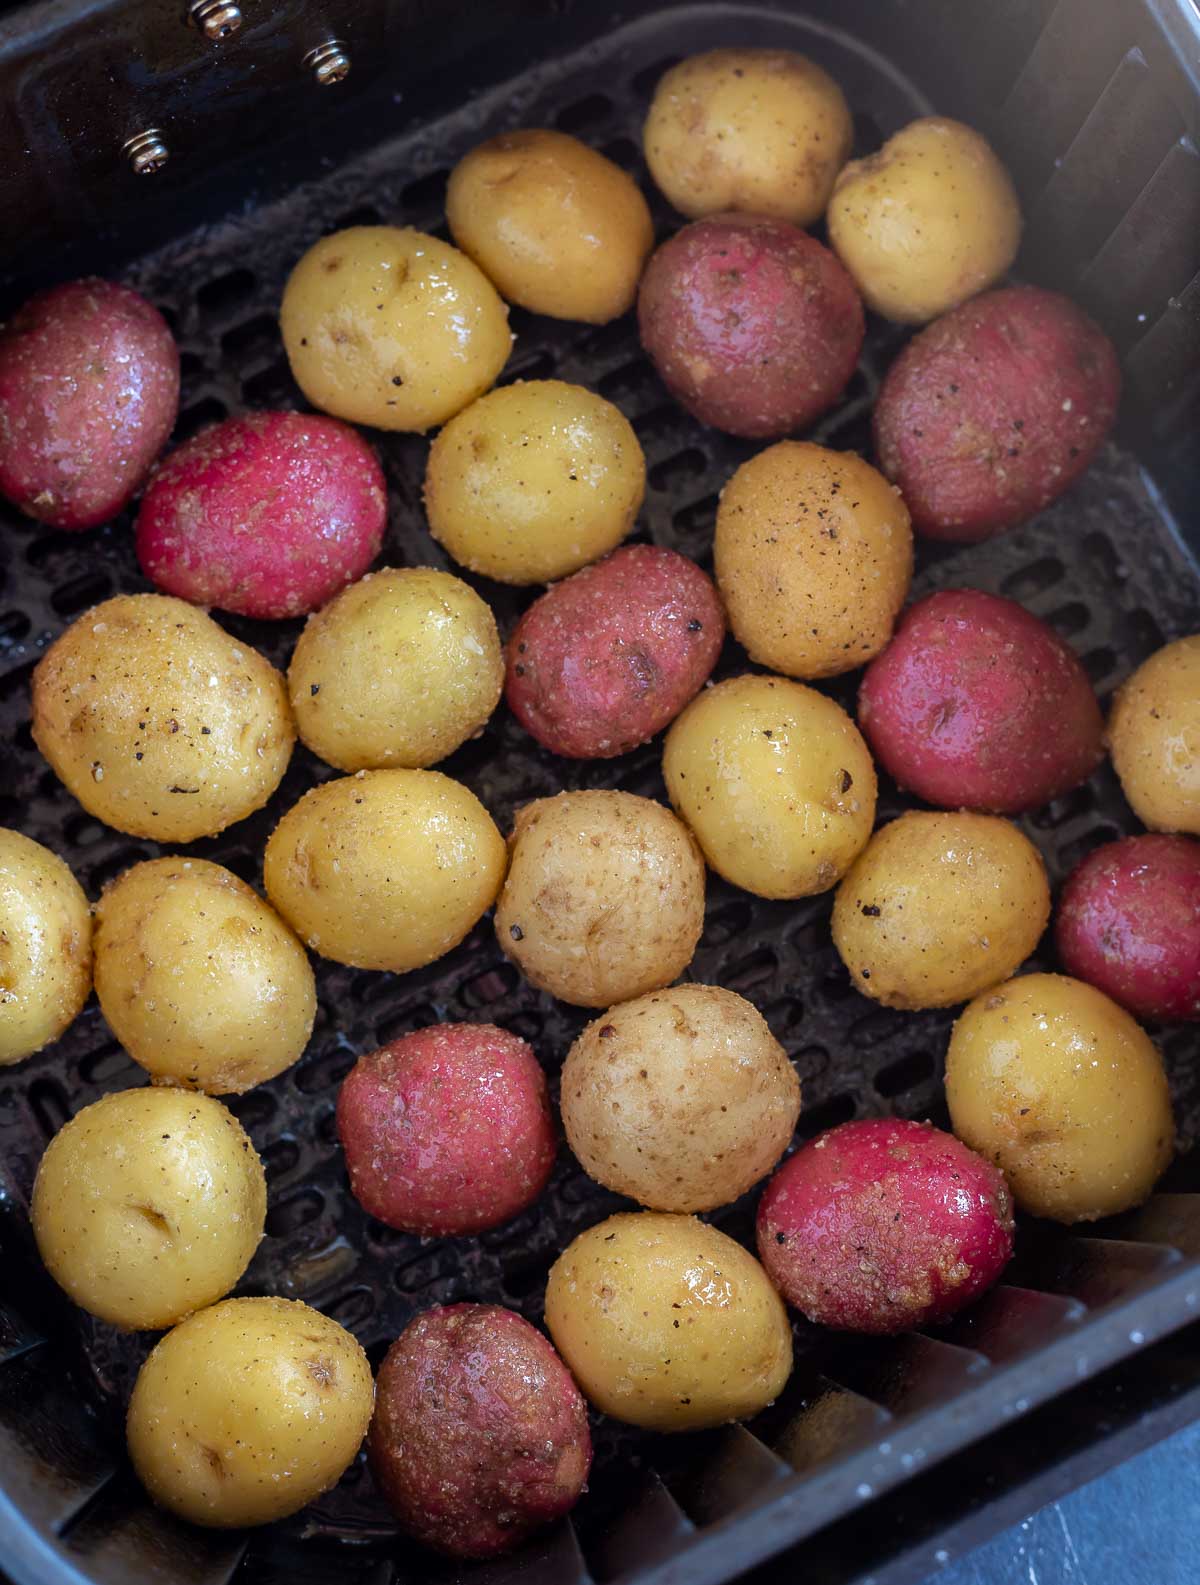 uncooked potatoes in air fryer basket